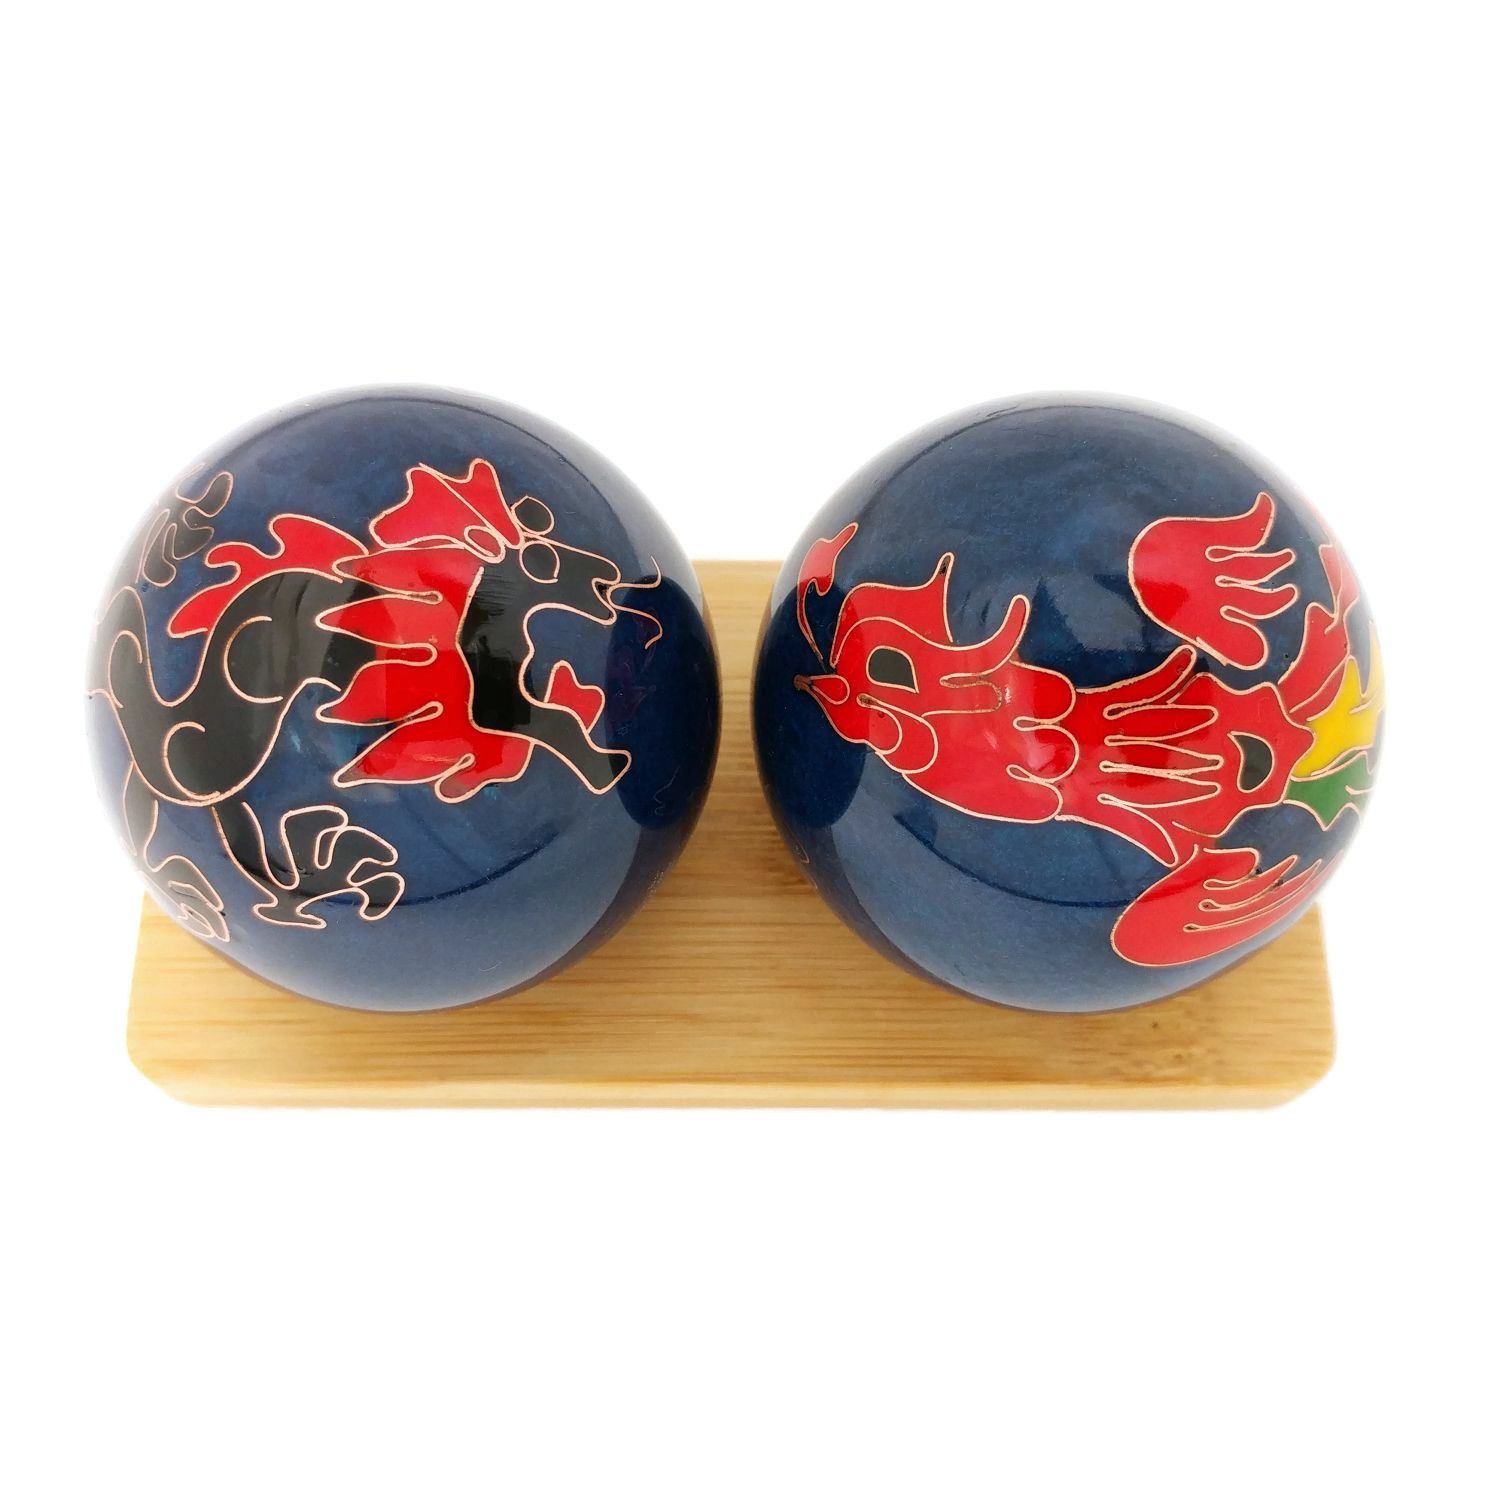 Iron Baoding Cloisonne Balls Dragon/Phoenix FREE SHIPPING 